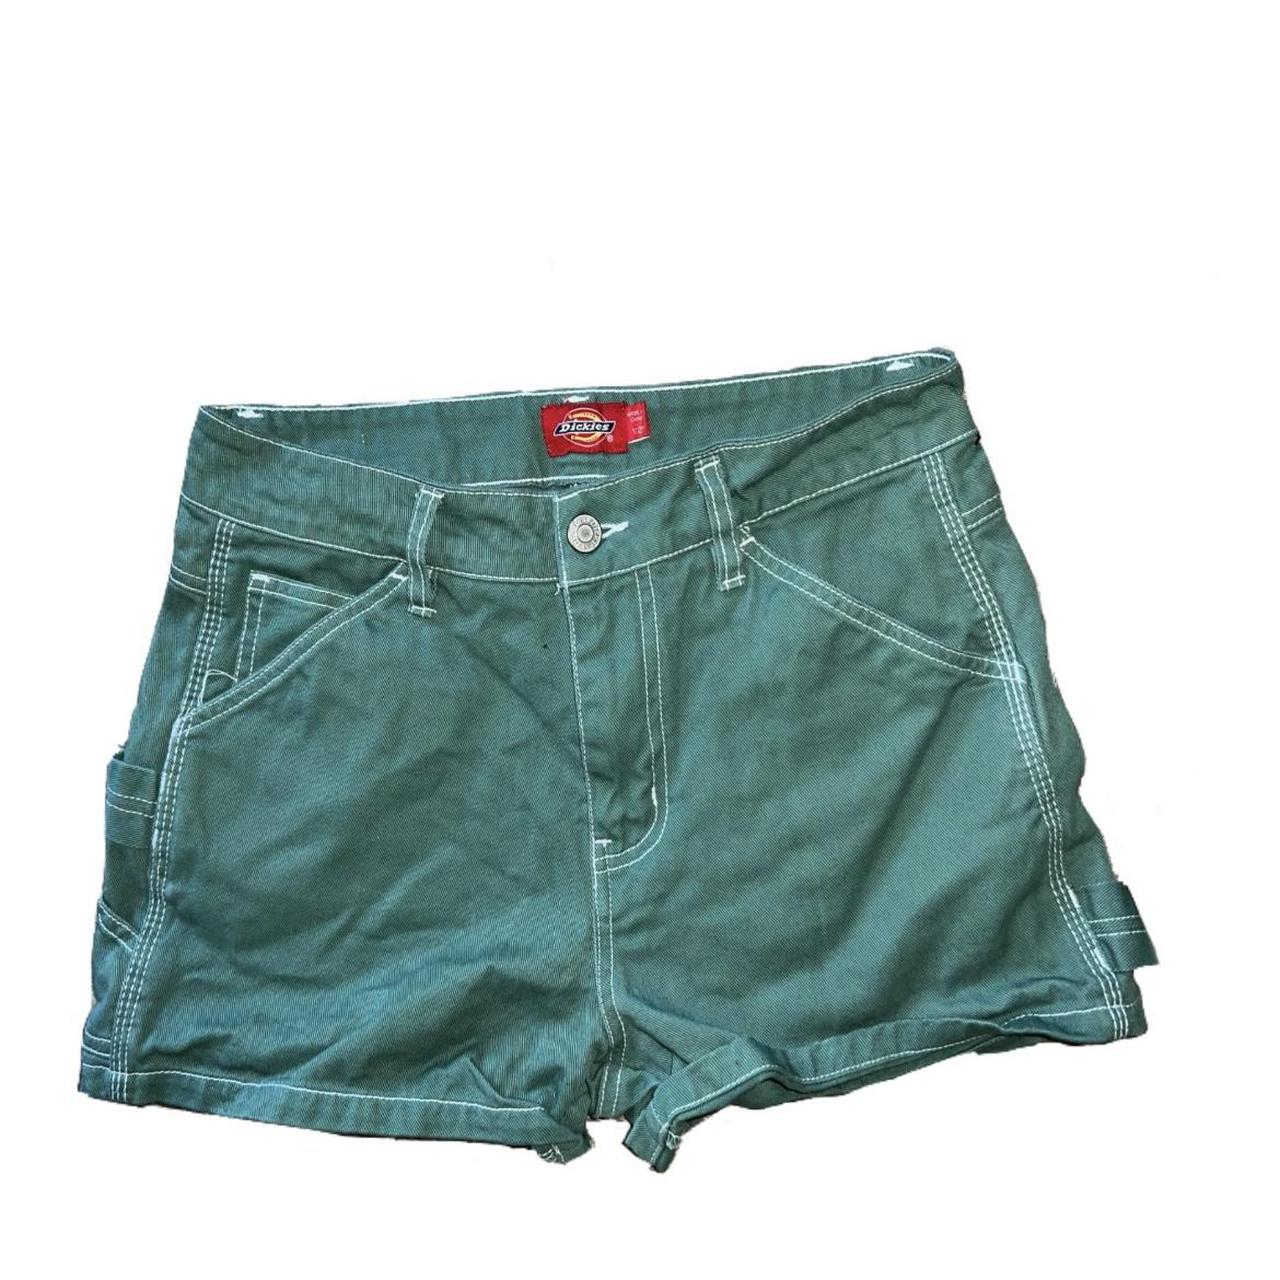 Dickies Women's Green Shorts | Depop